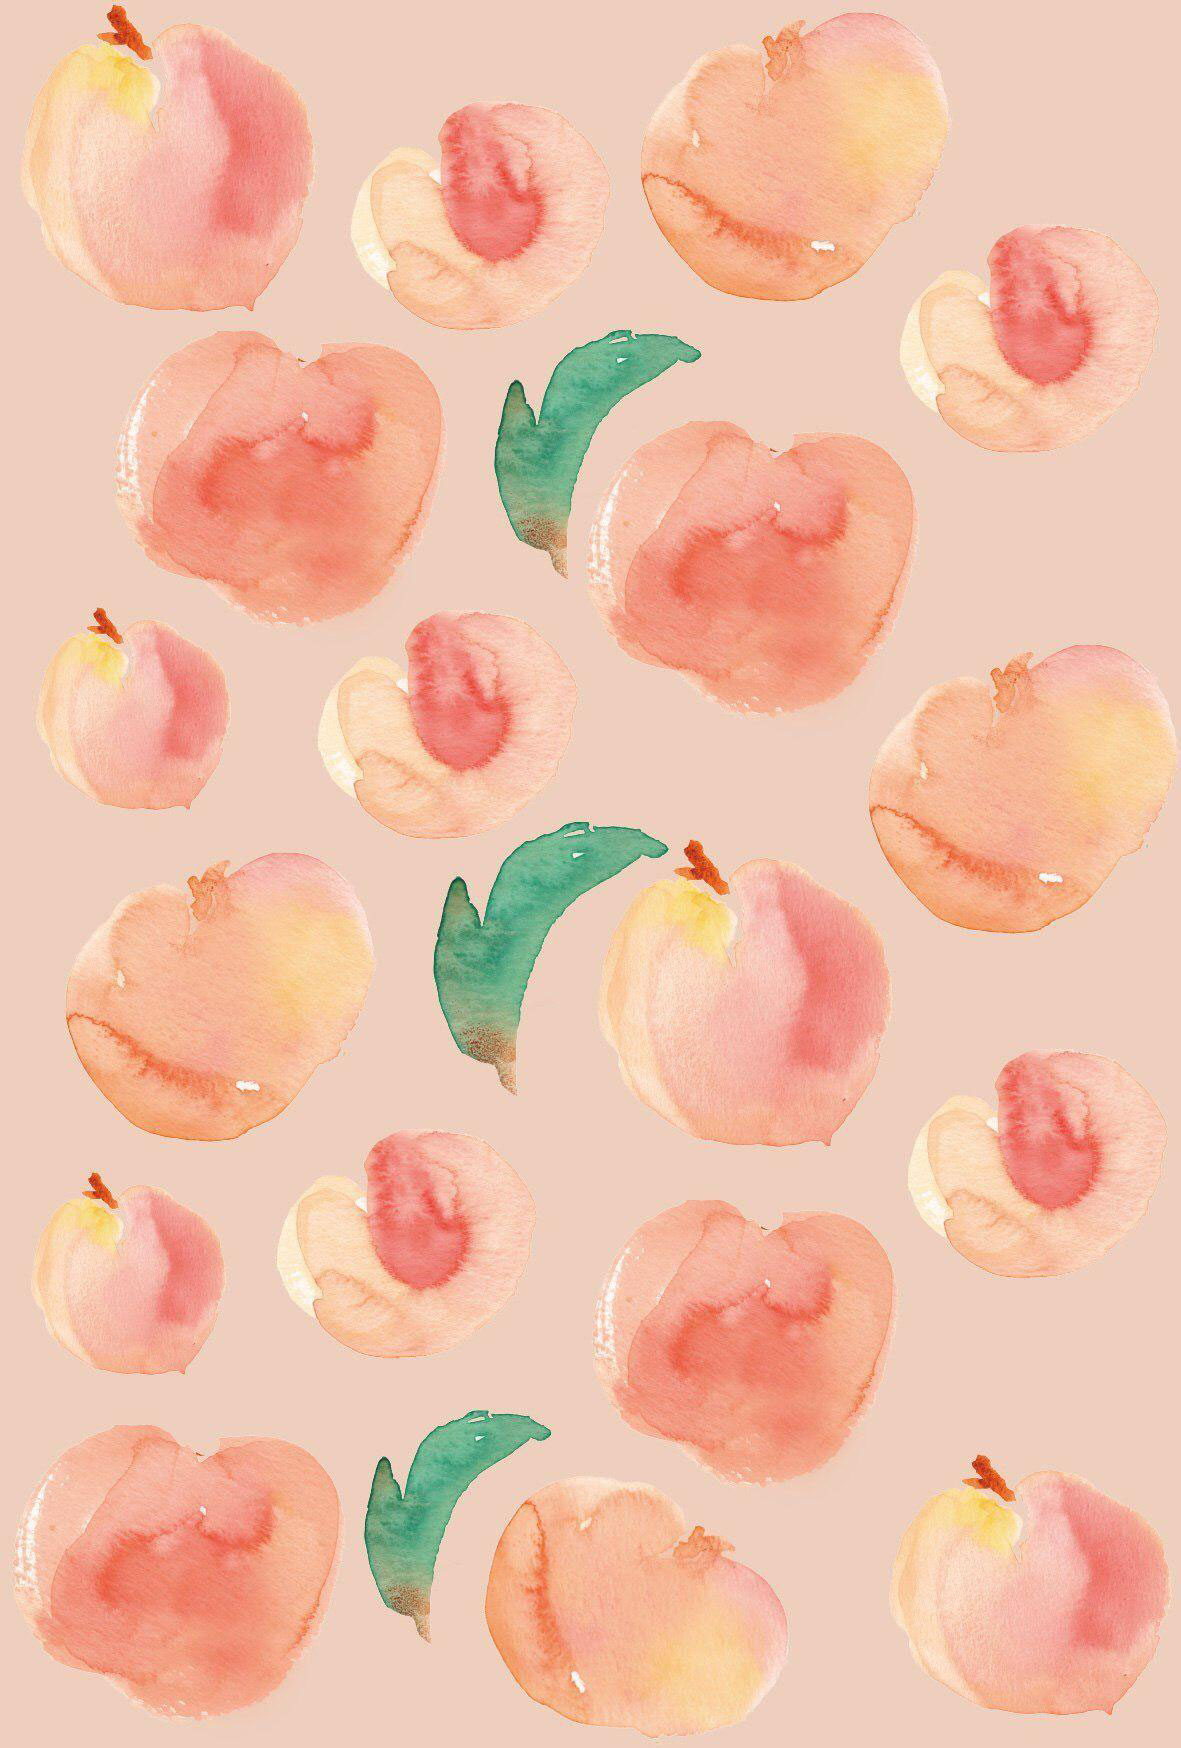 Peach aesthetic wallpaper pc